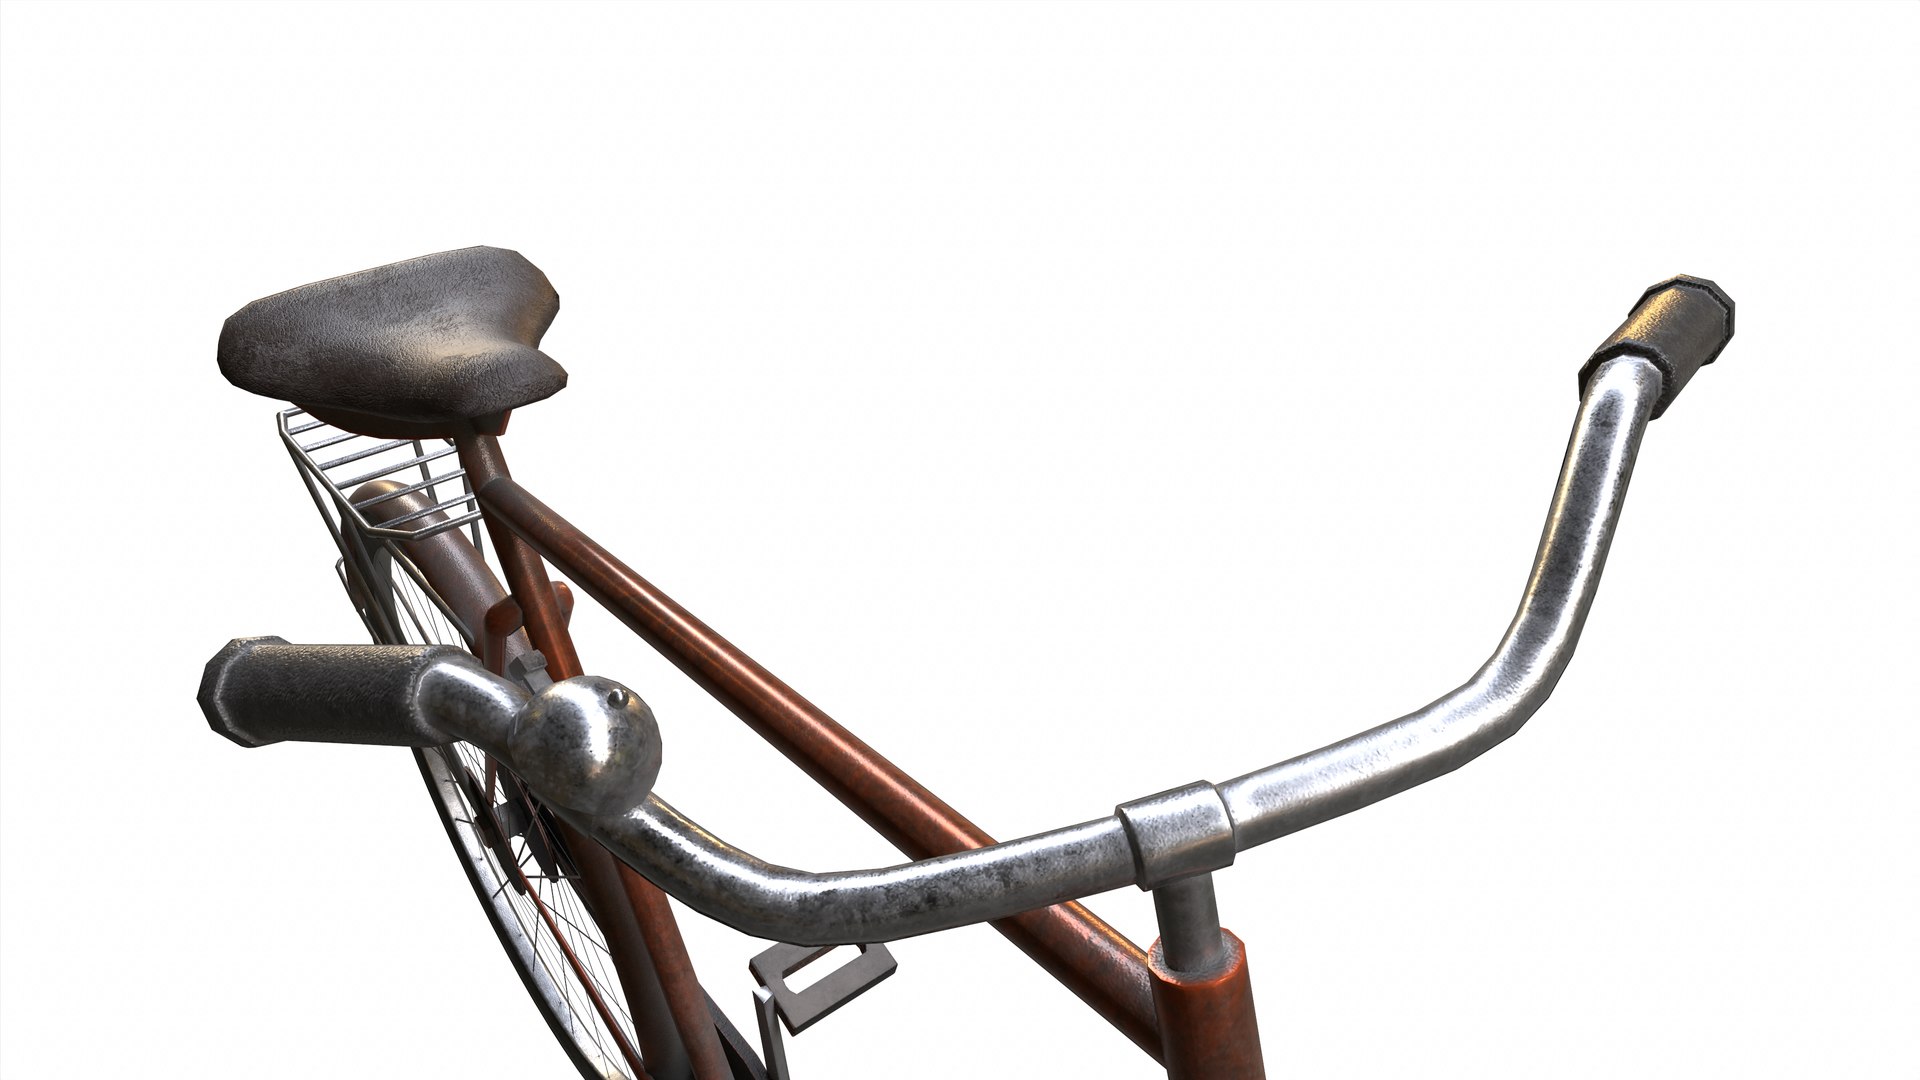 3D Old Bicycle model - TurboSquid 2003467